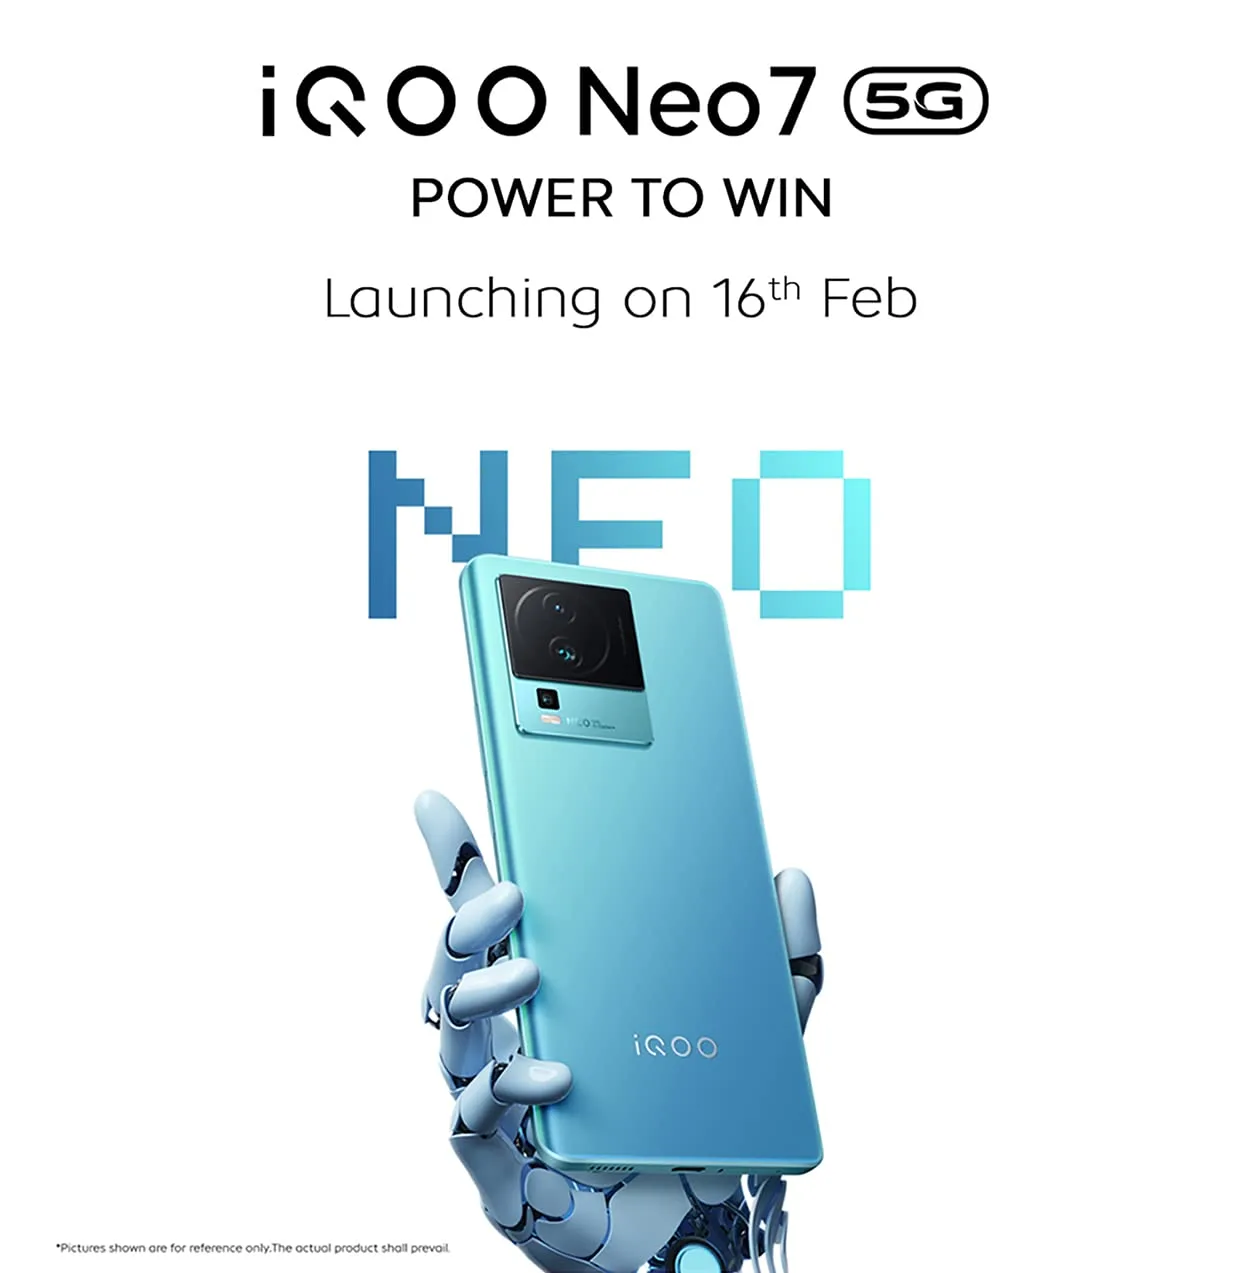 iQOO Neo 7 5G launching on 16th feb